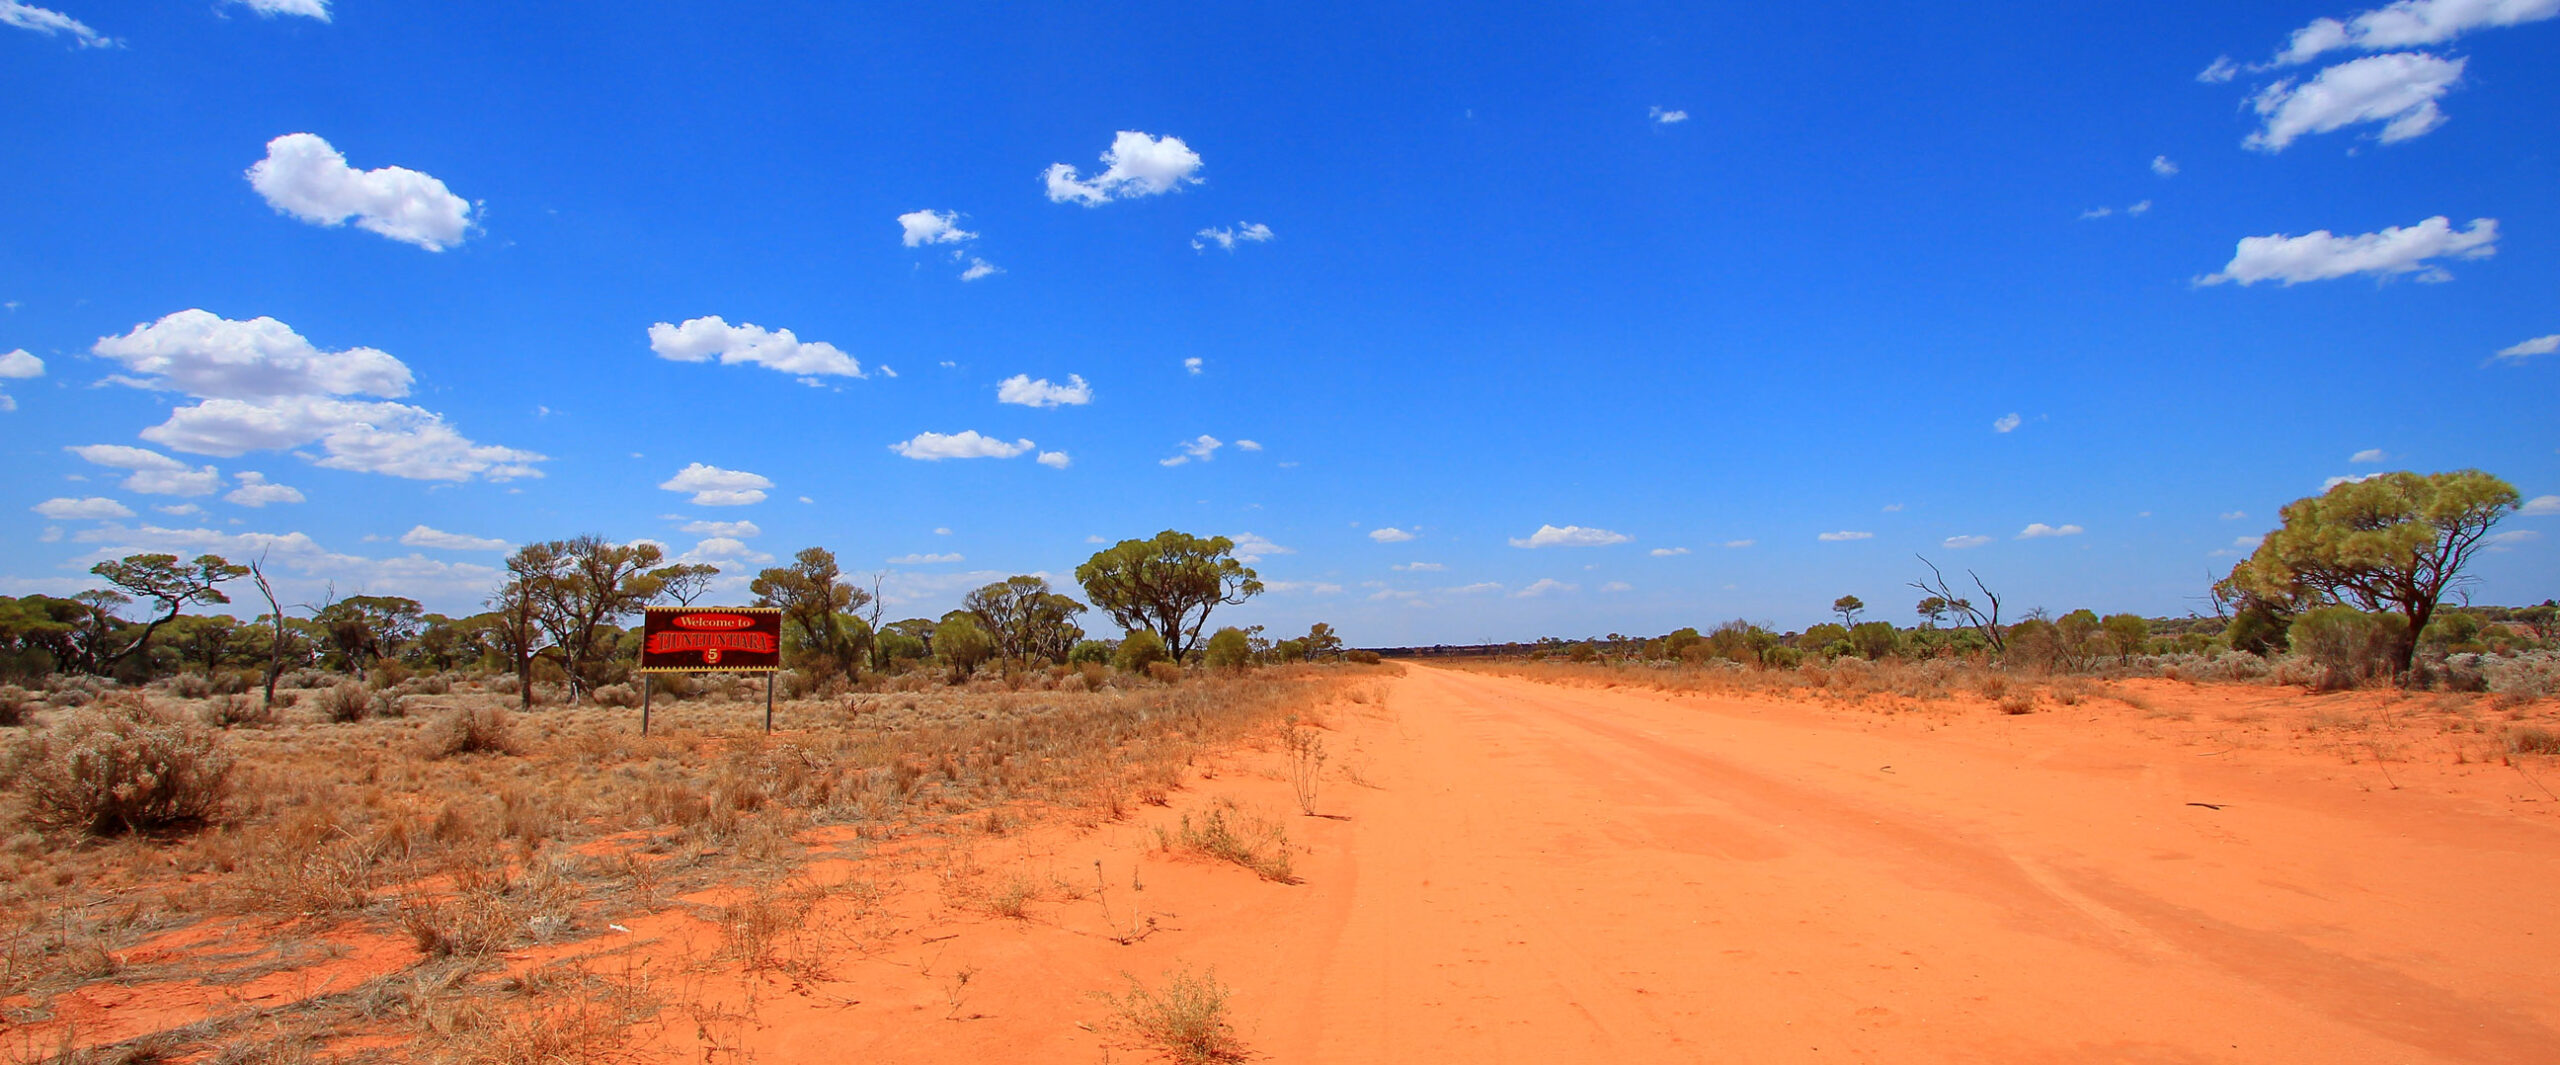 Hep C Treatment Barriers for Rural Aboriginal South Australians